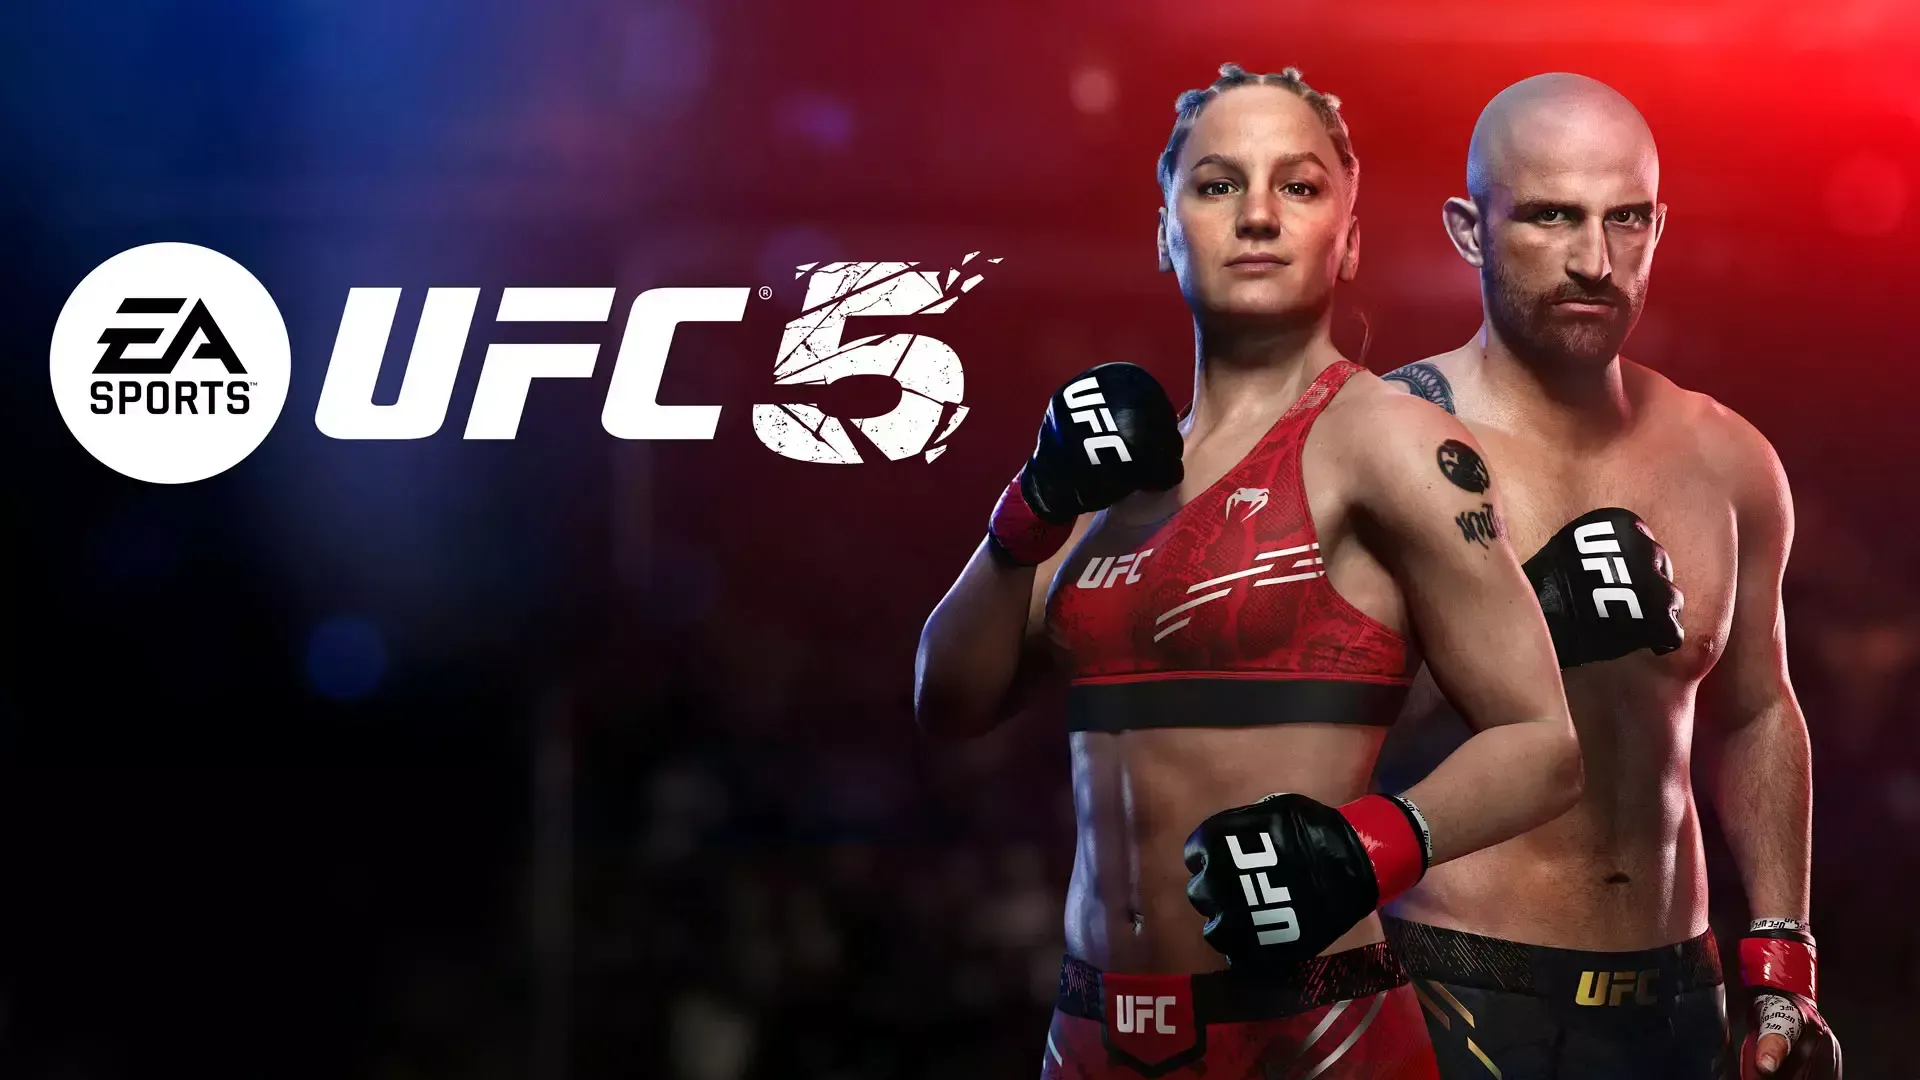 EA Sports UFC 4 - PlayStation 4 - Games Center